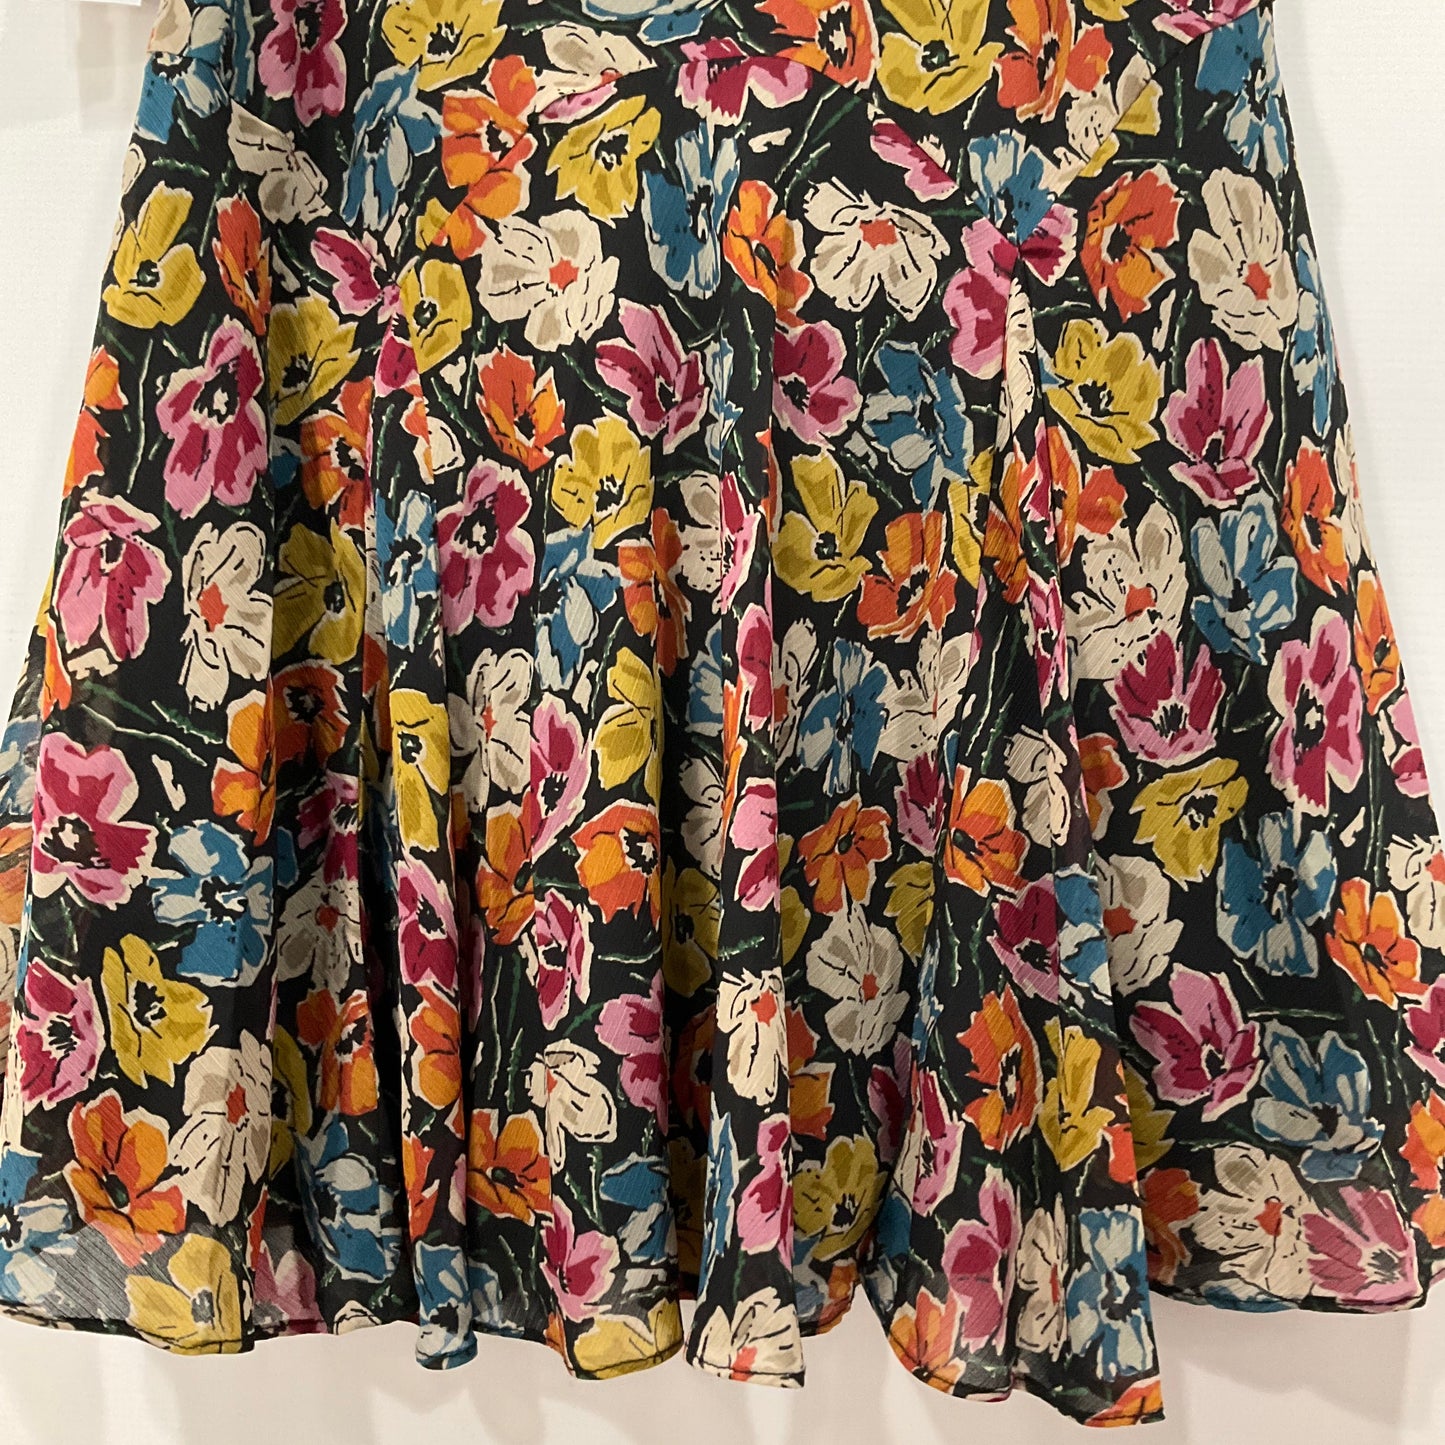 Floral Print Skirt Midi Lauren By Ralph Lauren, Size S